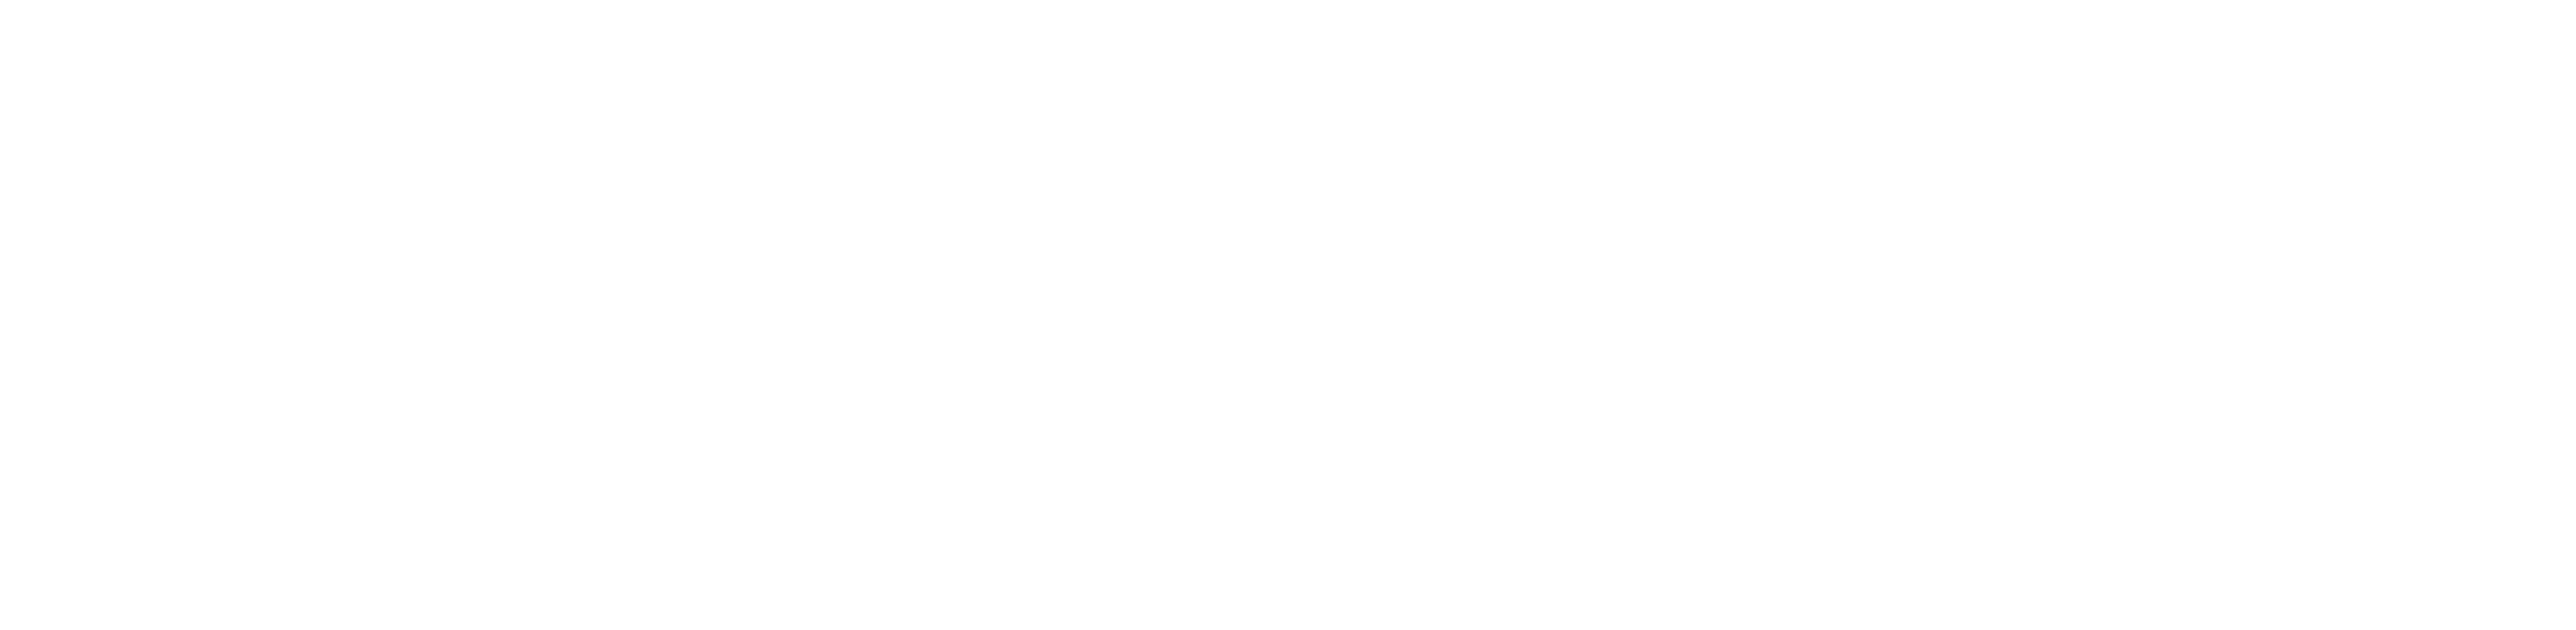 Longoria & Kelly Logo.